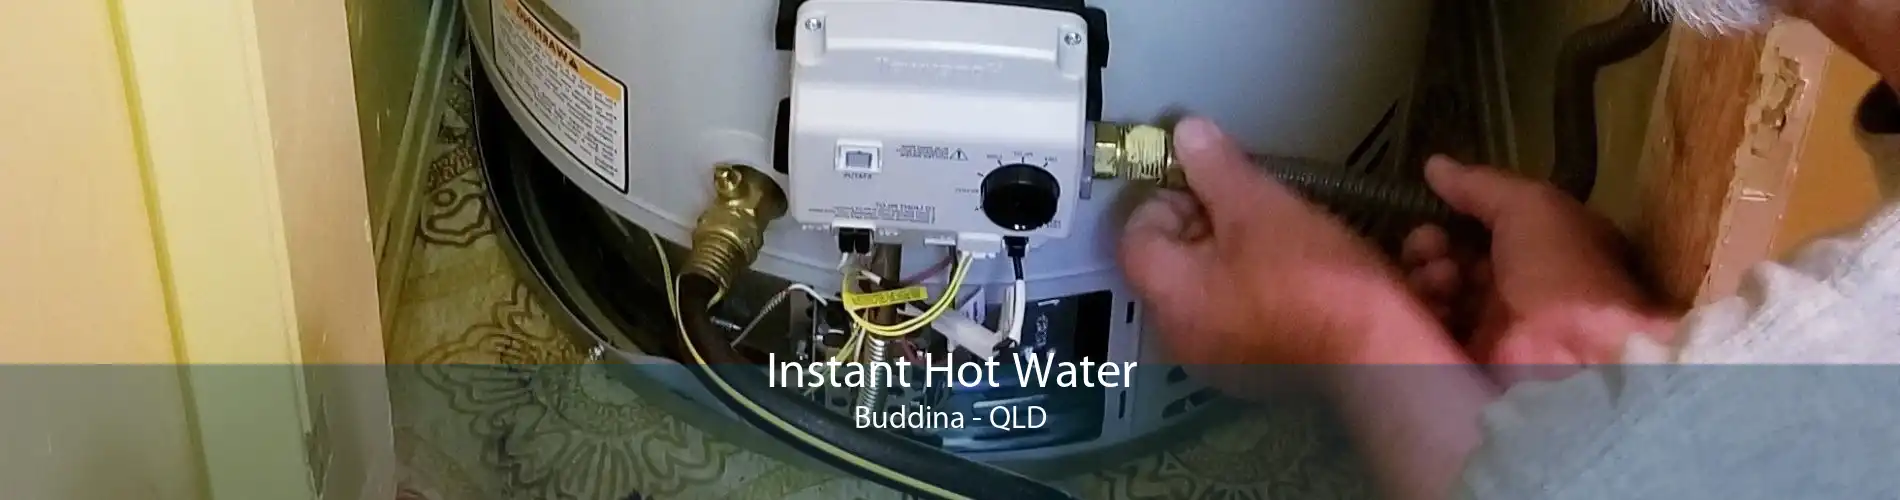 Instant Hot Water Buddina - QLD